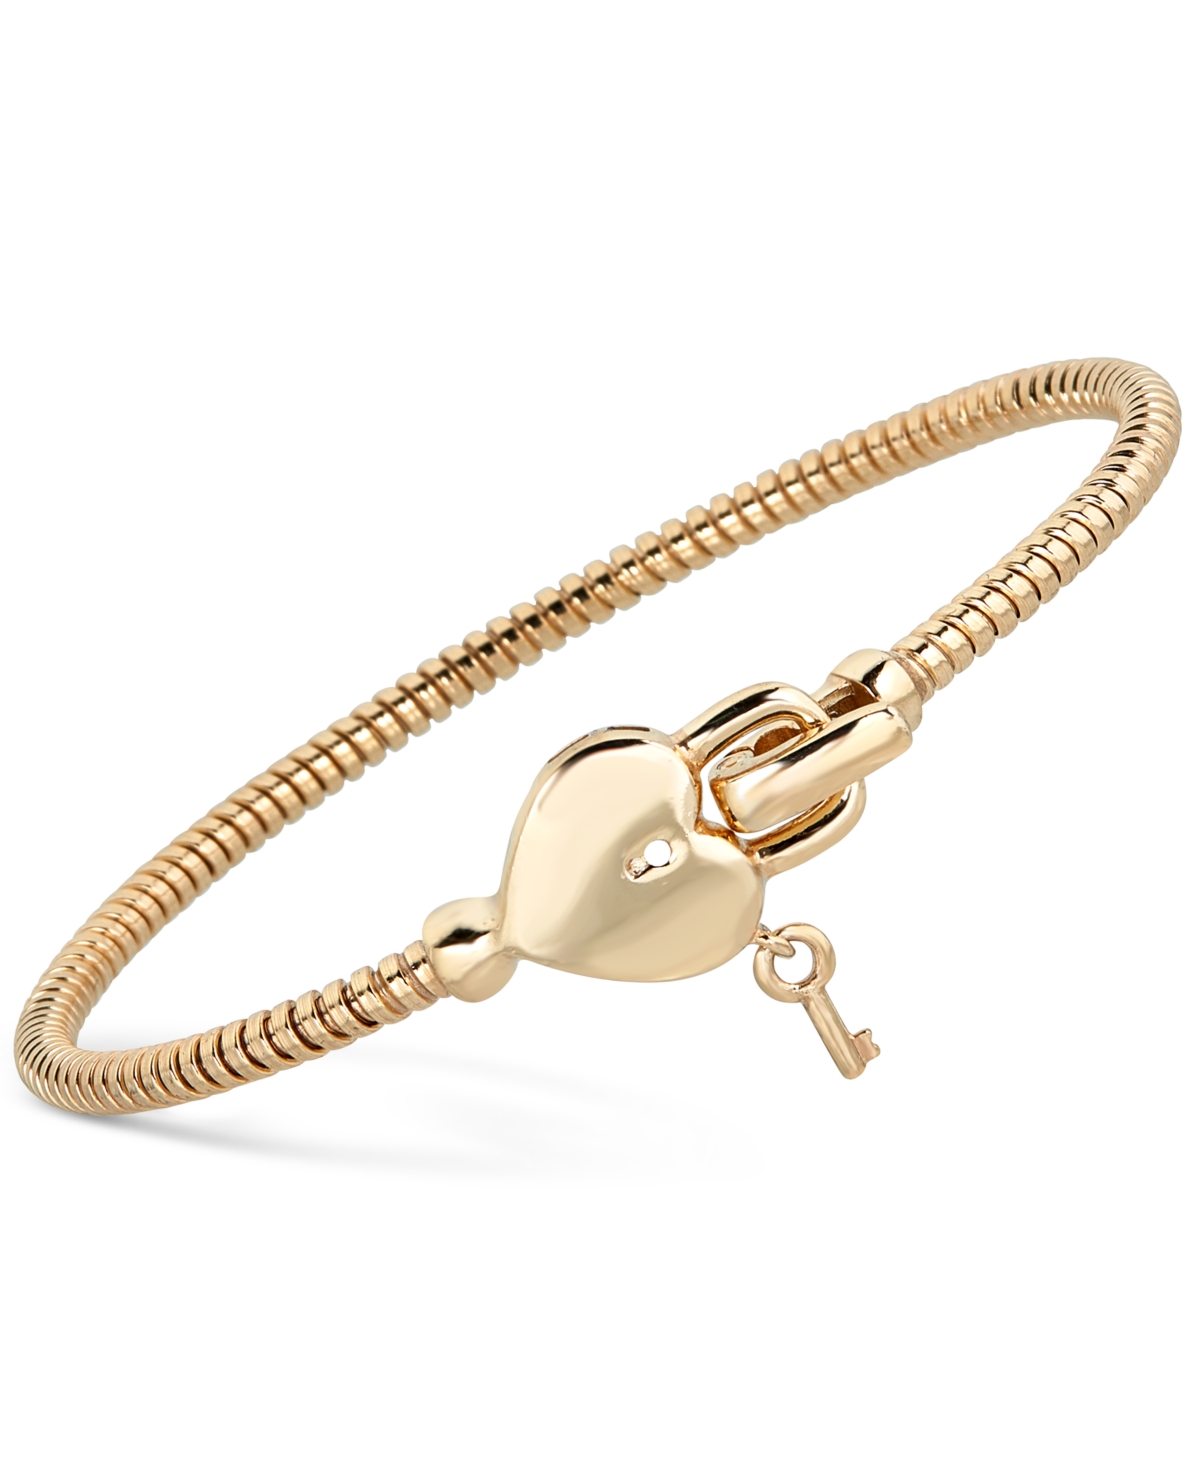 Heart & Key Tubogas Bangle Bracelet in 14k Gold-Plated Sterling Silver - Gold Over Silver